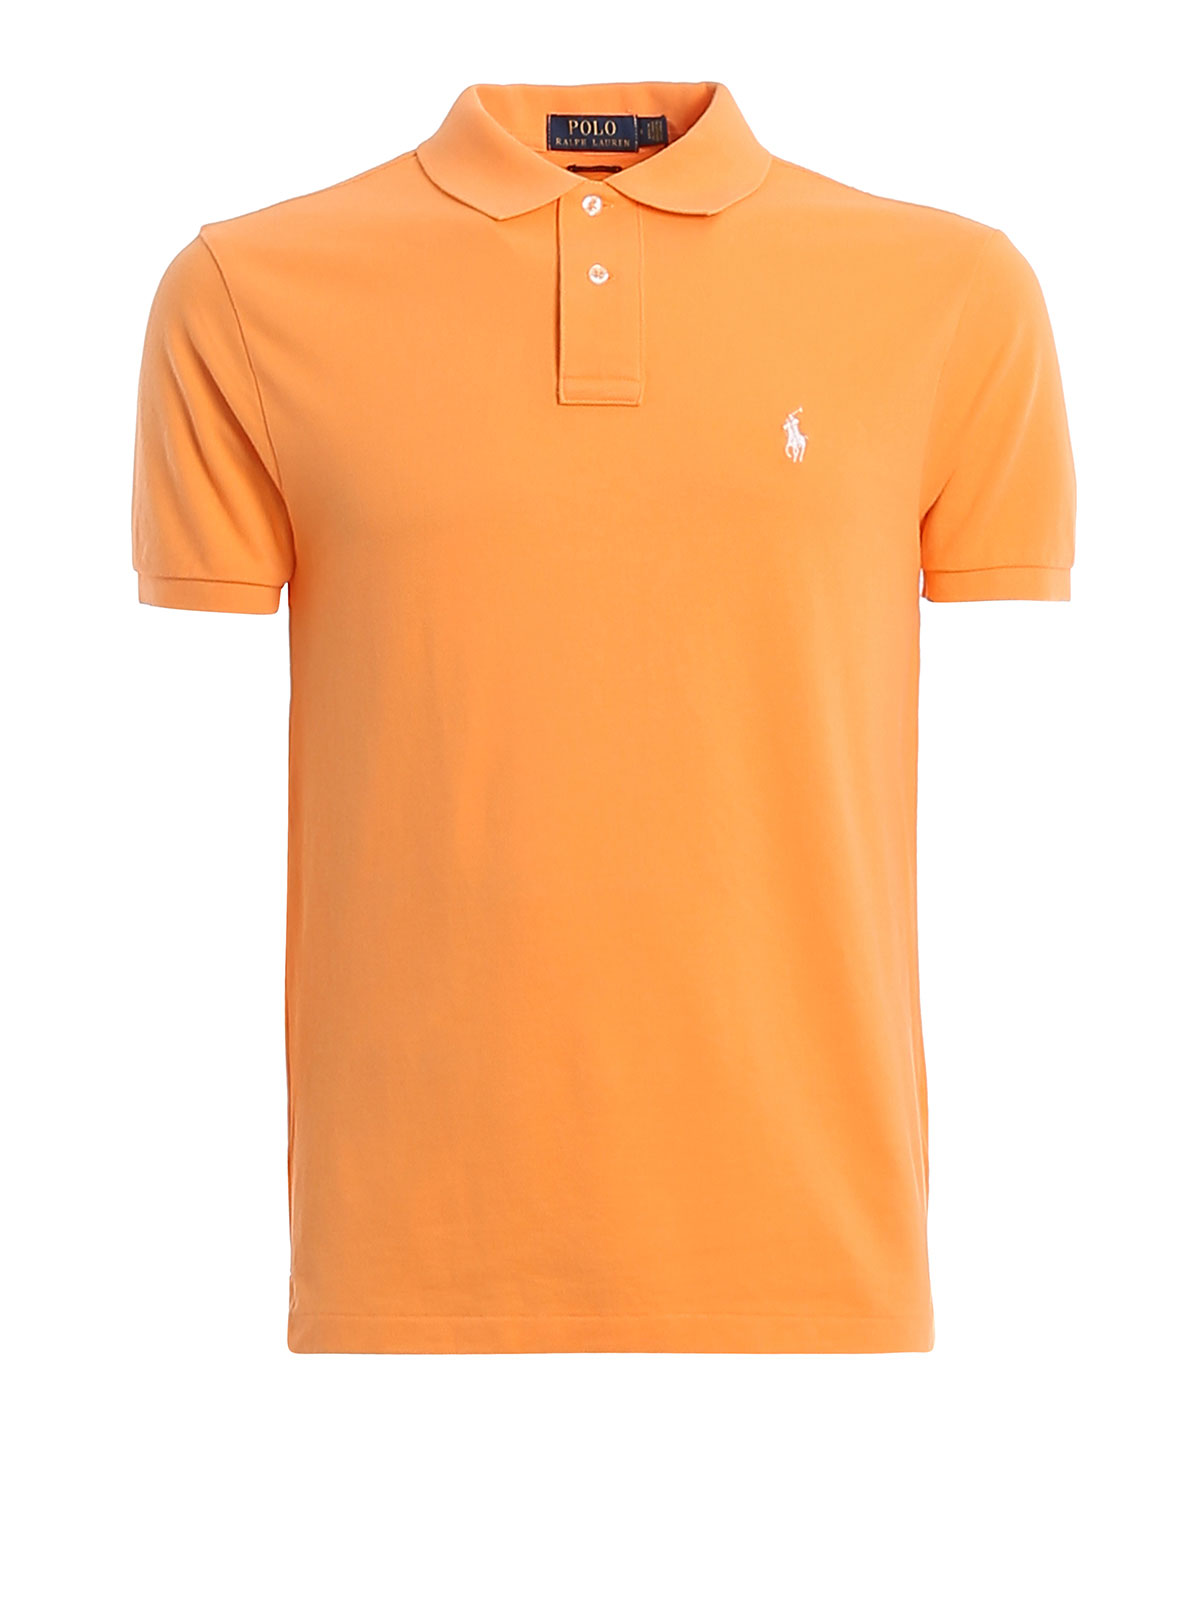 mens orange ralph lauren polo shirt